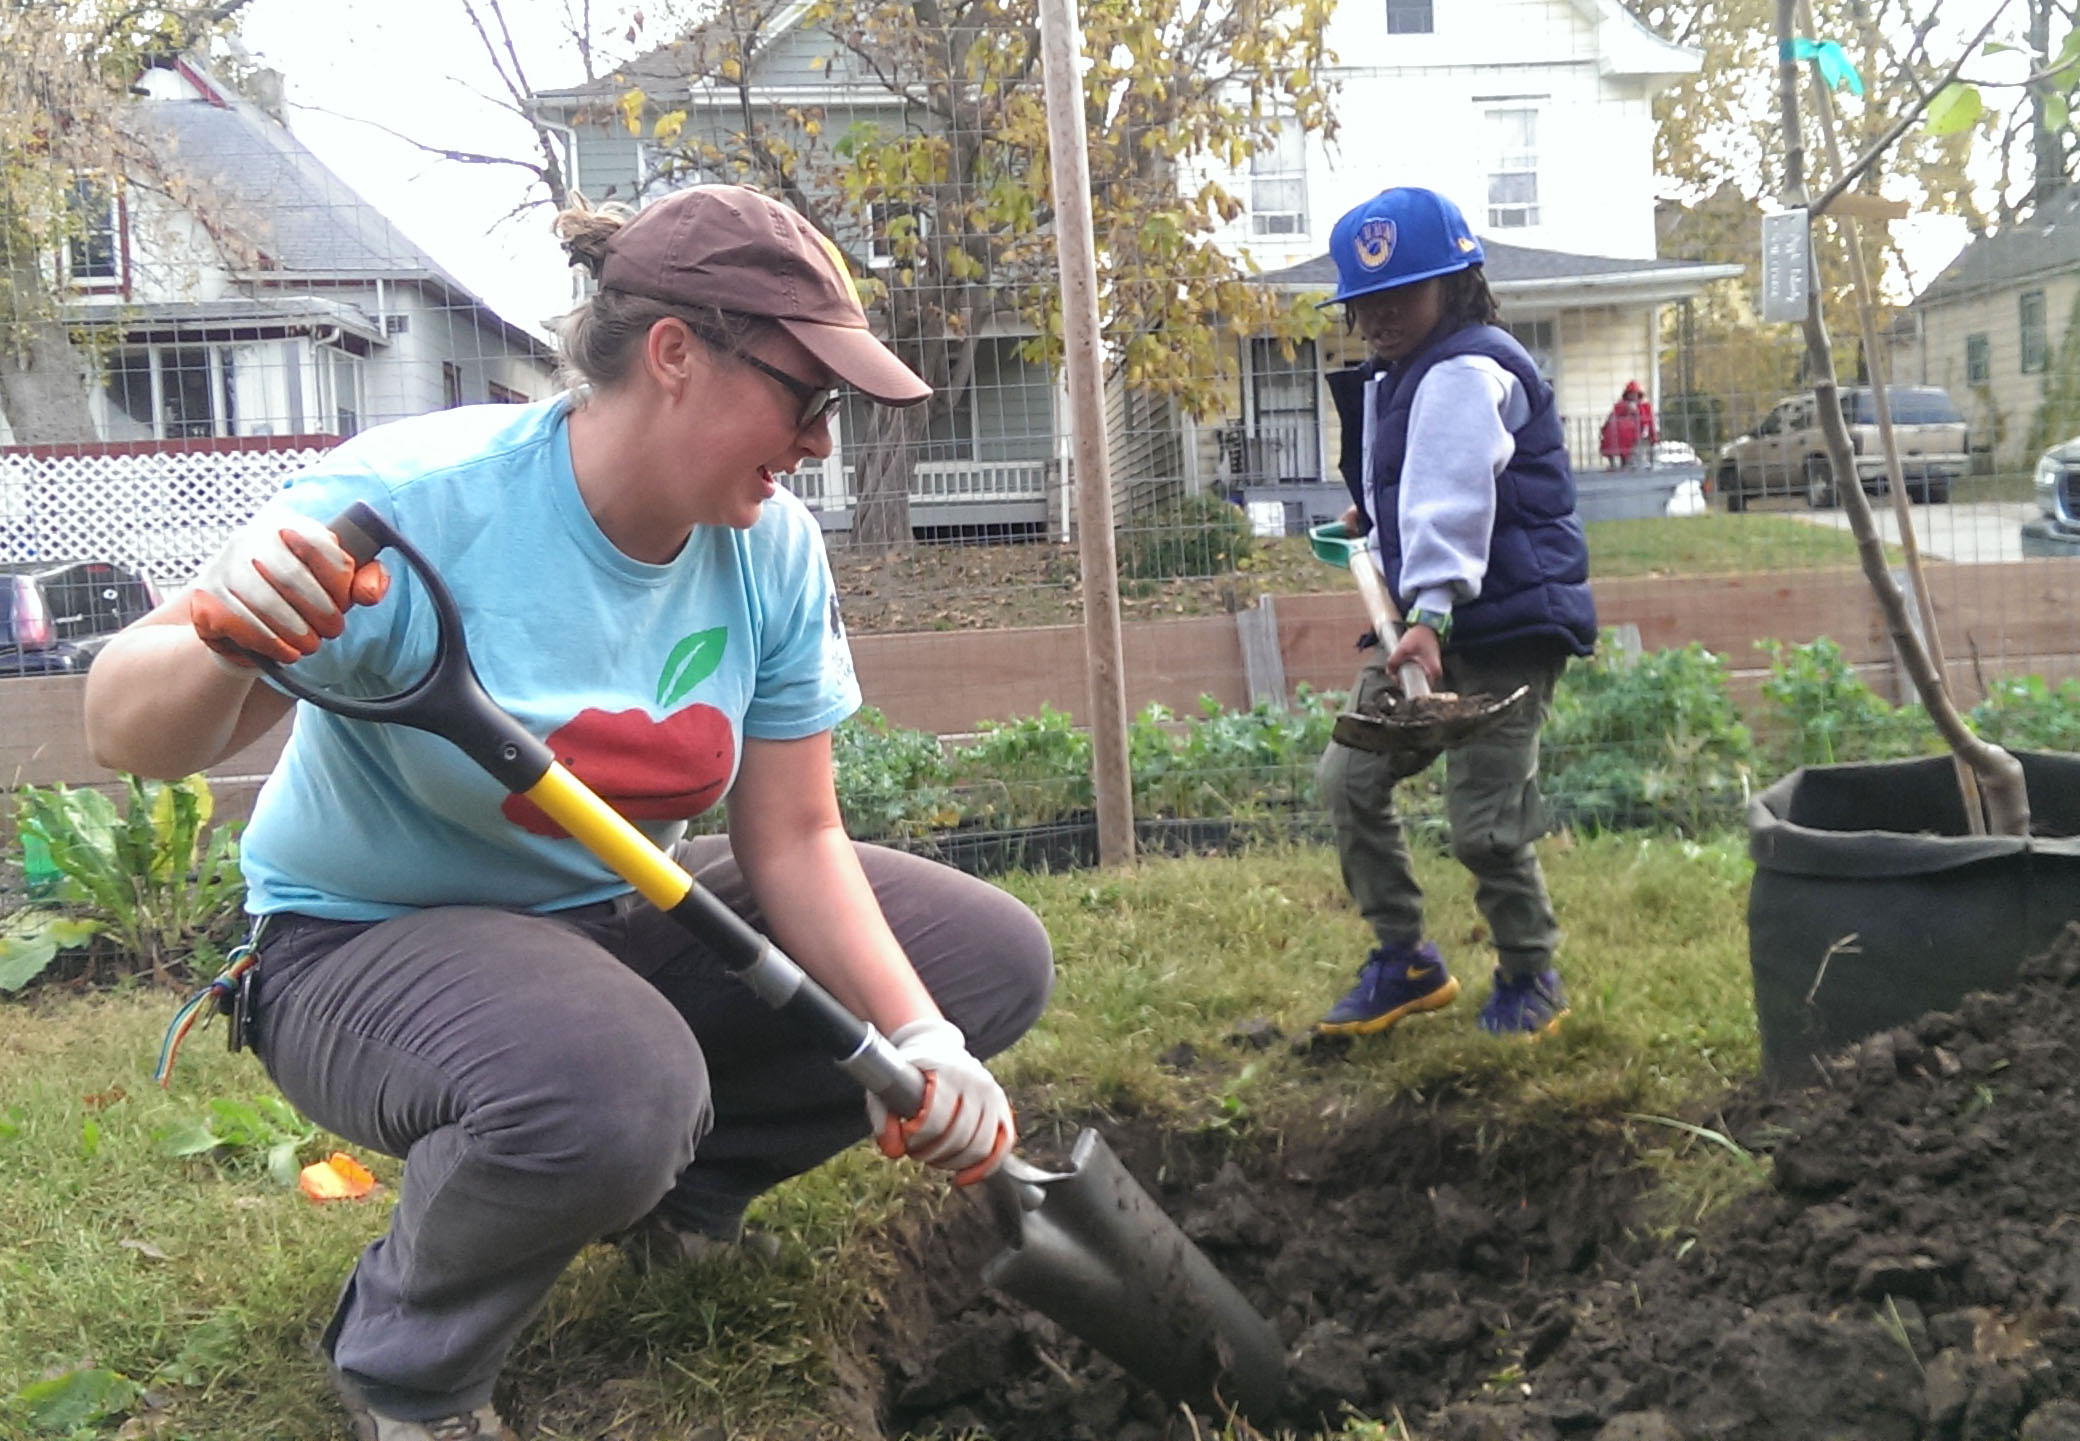 Amanda working on a planting project with a neighborhood kiddo